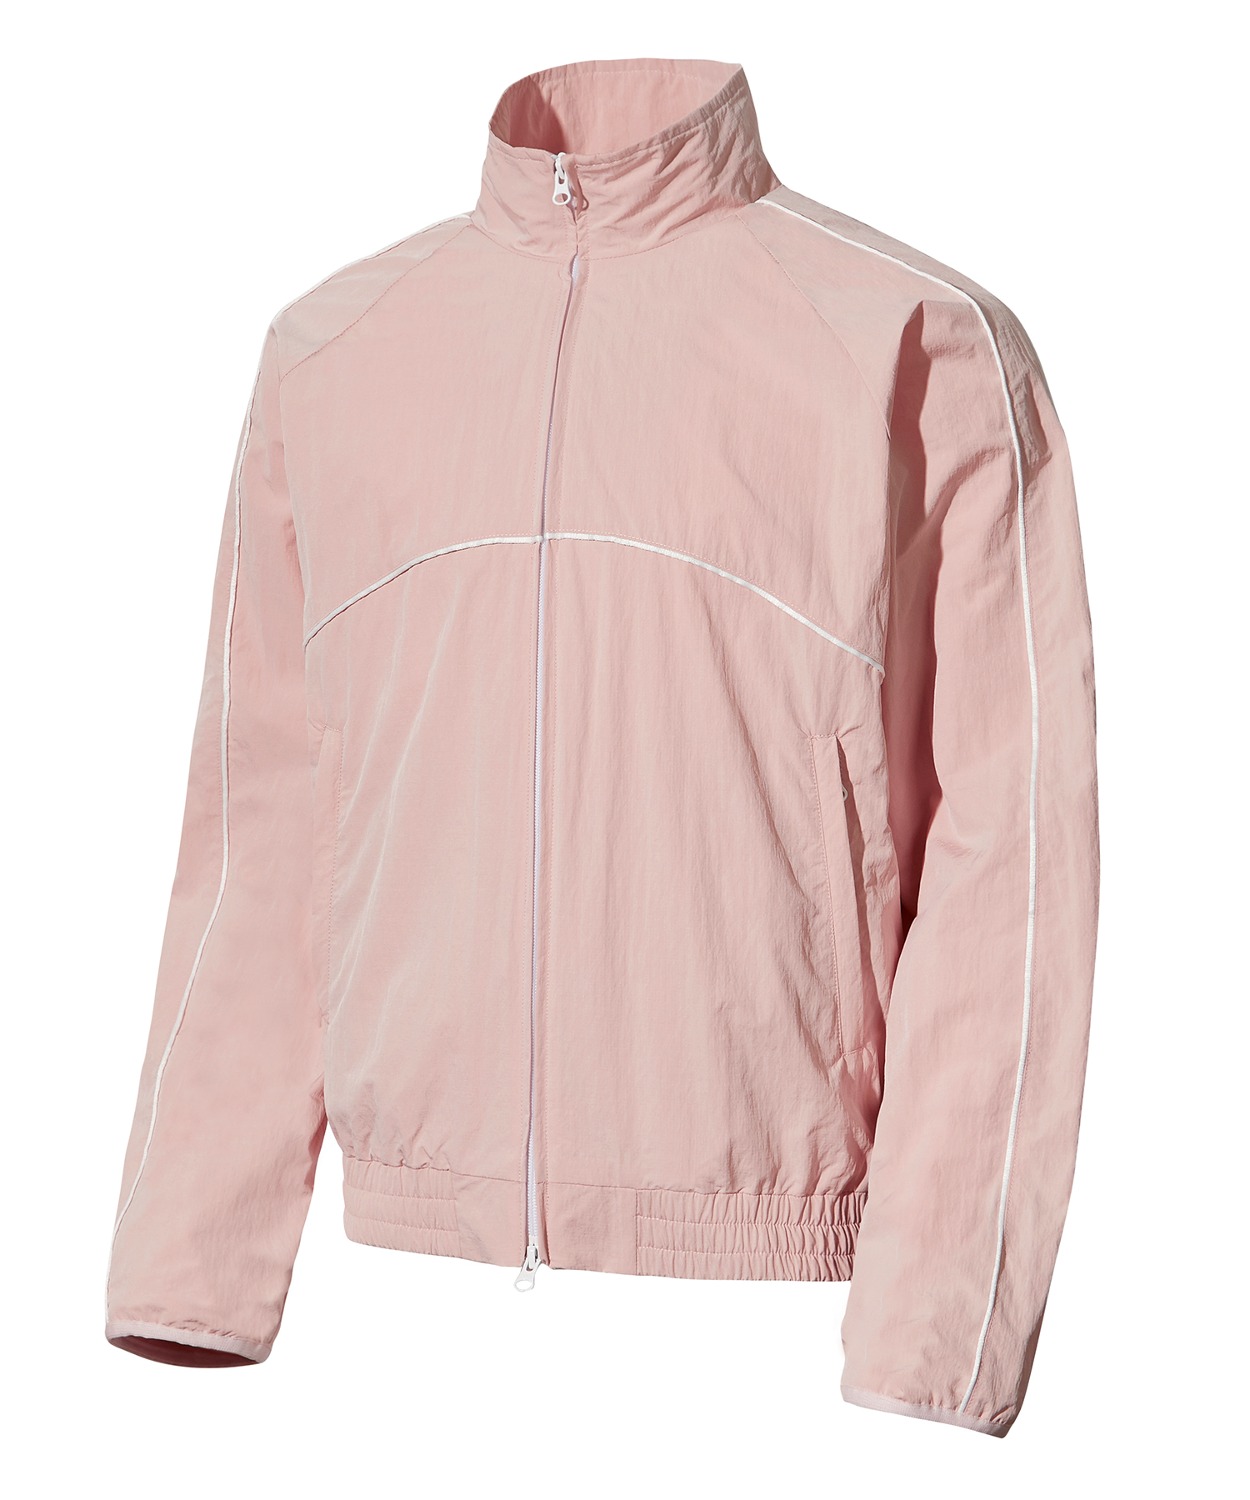 VASROCK,Club Field Piping Track Jacket Pink